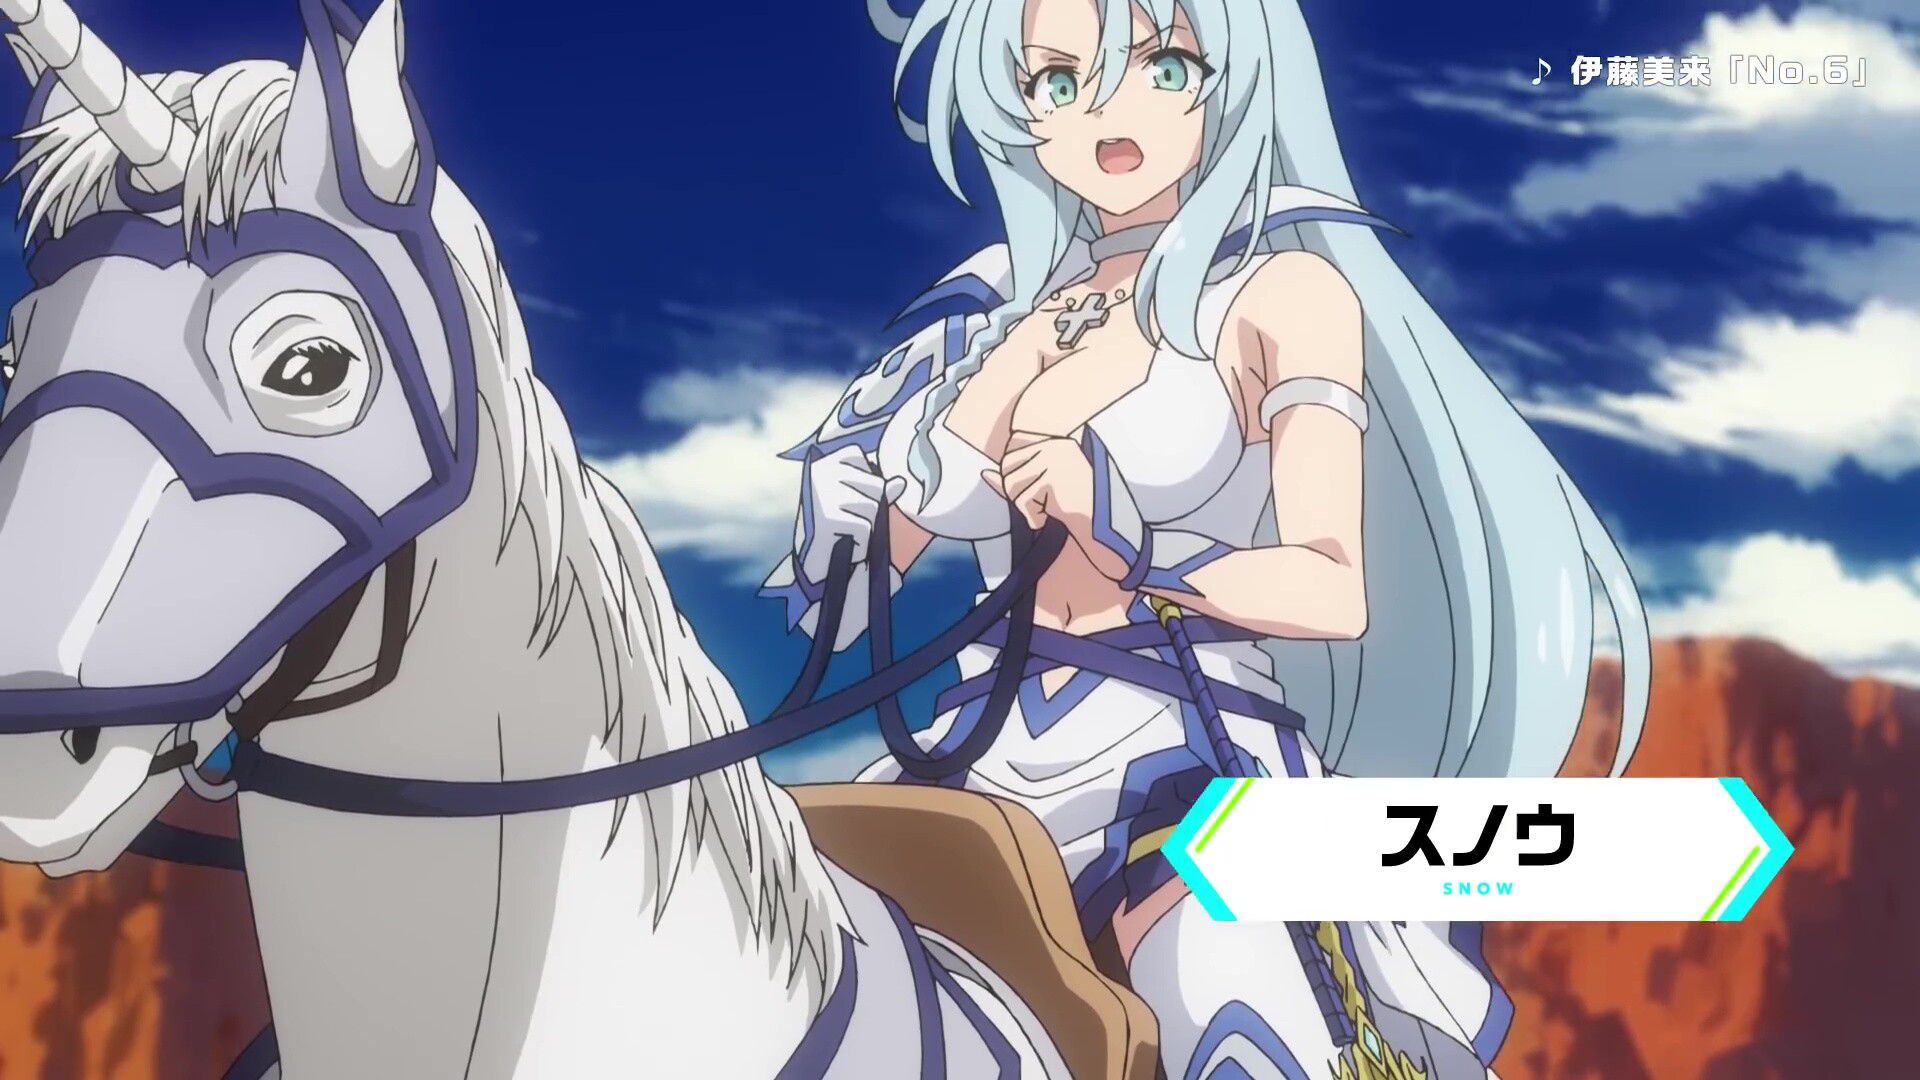 Anime "Combatant, I'm dispatched! Erotic costume girls and neta! April broadcasting starts 13